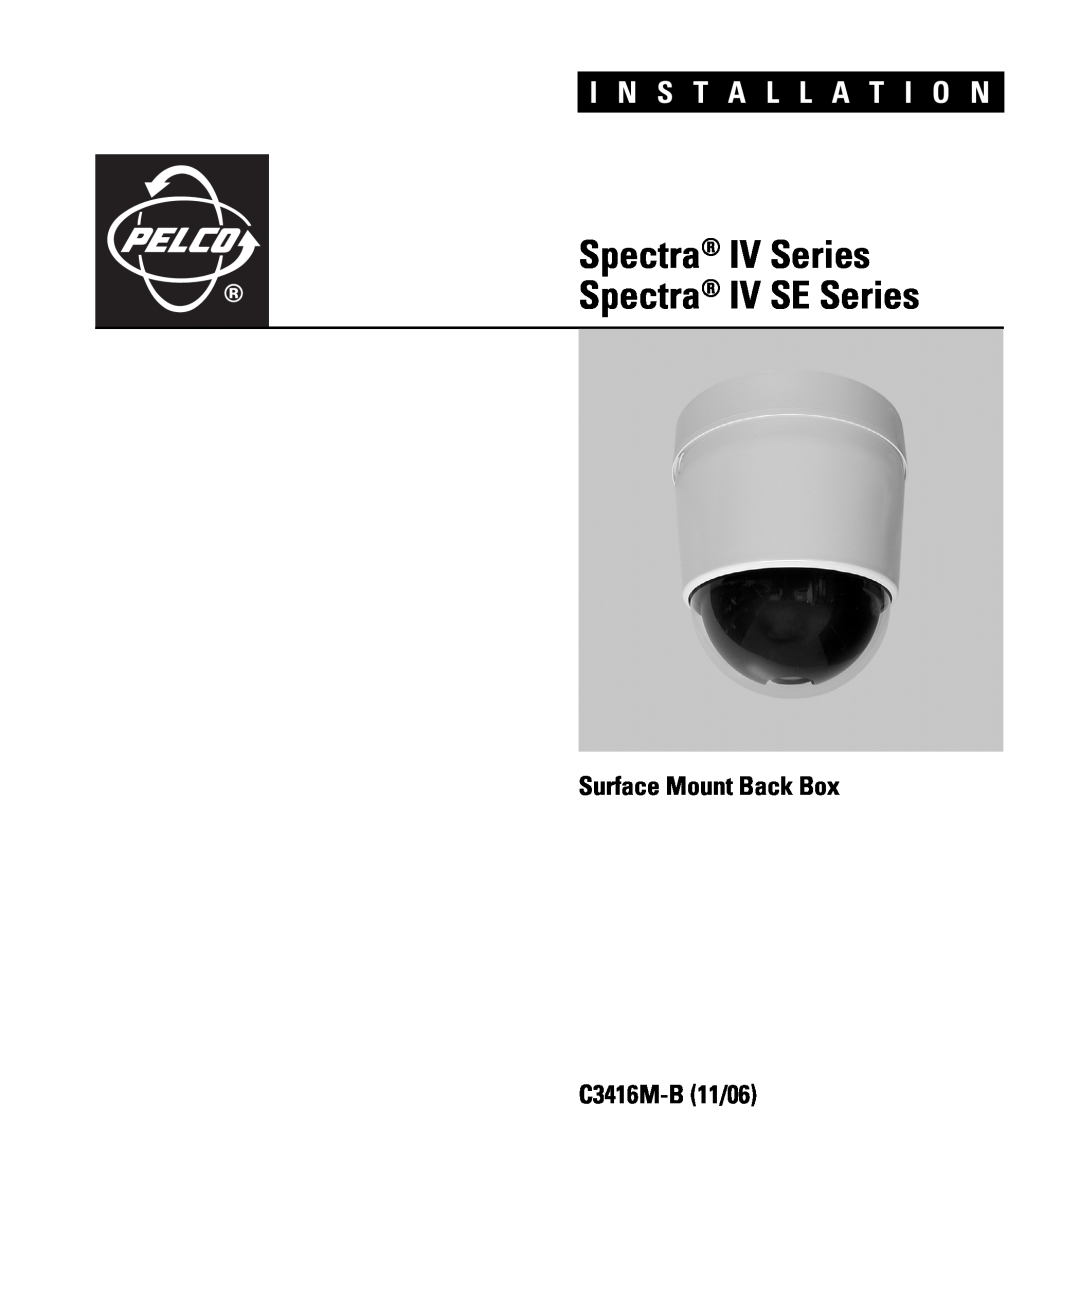 Pelco IV SE SERIES manual Spectra IV Series Spectra IV SE Series, I N S T A L L A T I O N, Pendant Mount Back Box 